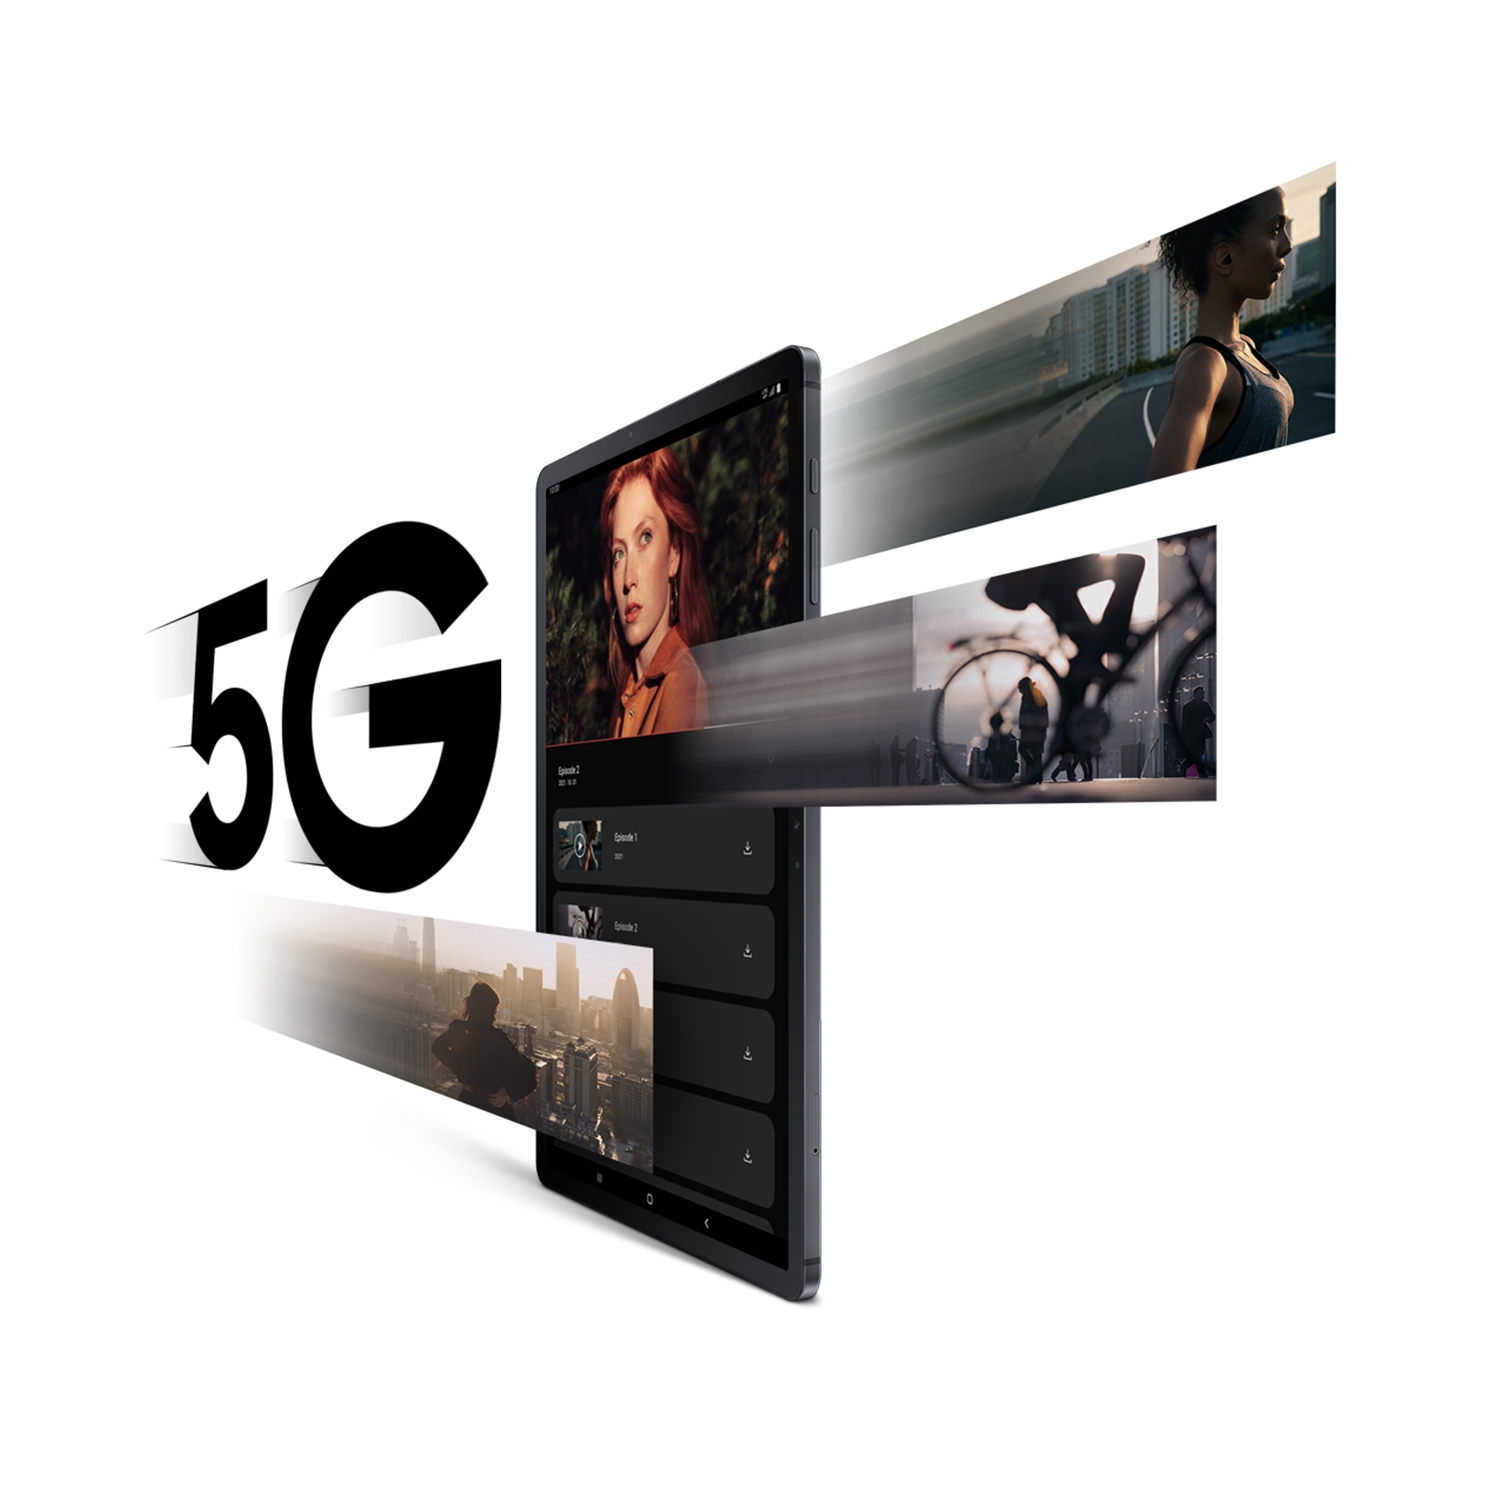 Thumbnail image of Galaxy Tab S7 FE 5G, 64GB, Mystic Black (US Cellular)